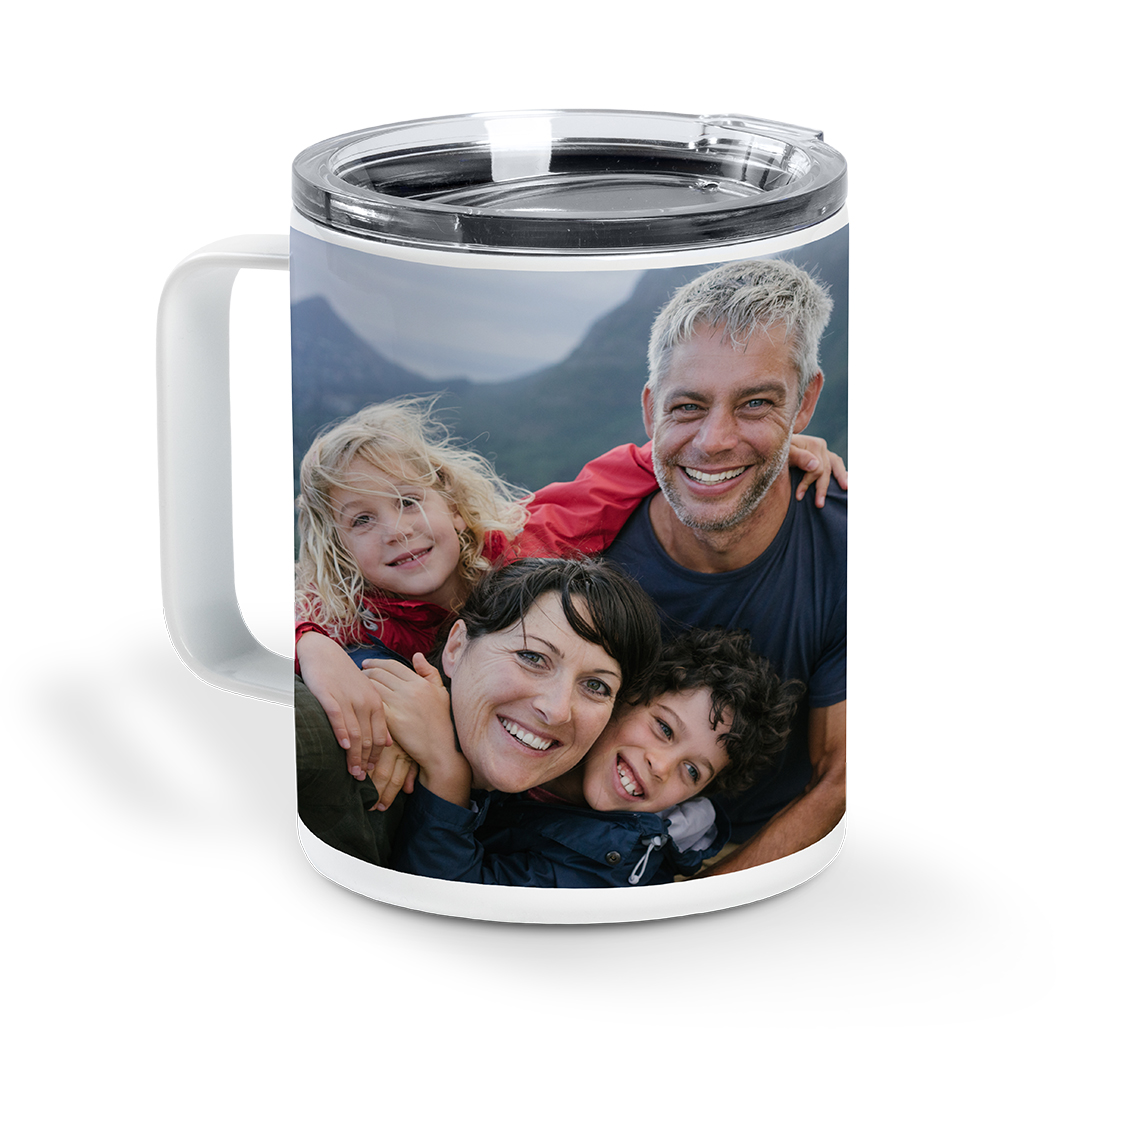 Personalised Thermal Travel Mug Cup Custom Photo Image Coffee Tea Xmas Gift